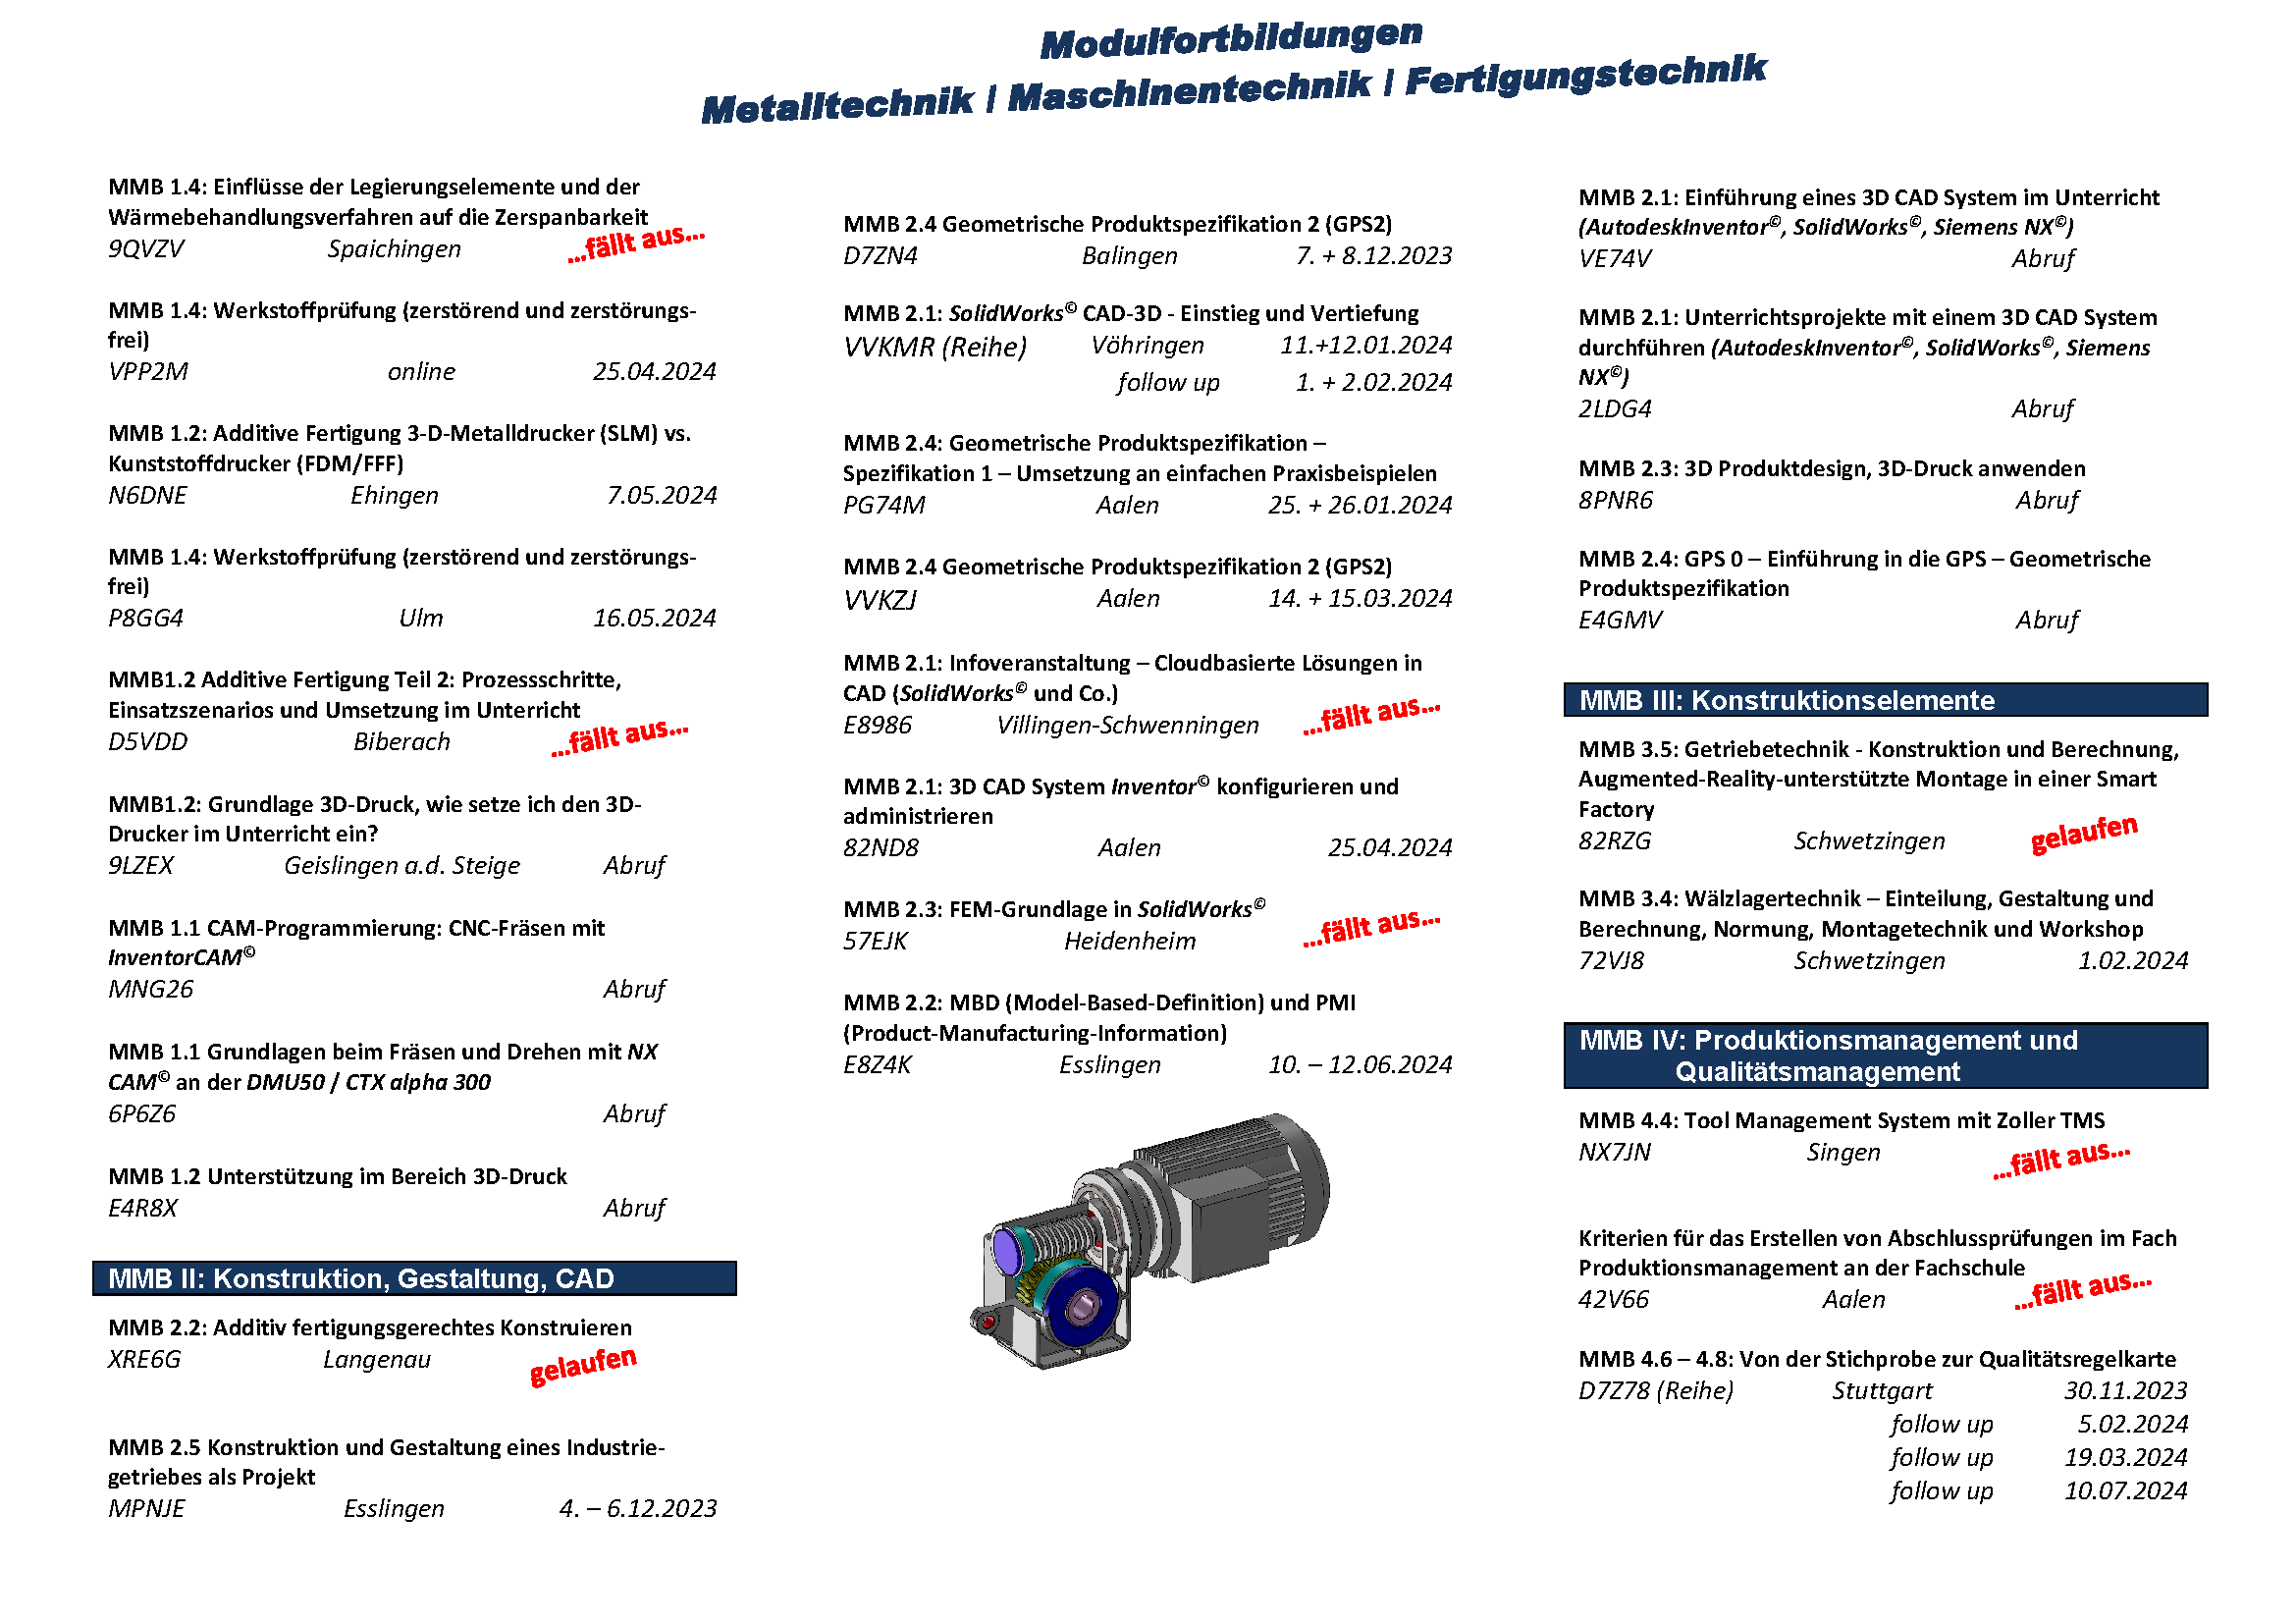 Modulfortbildungen Metalltechnik / Maschinentechnik / Fertigungstechnik  - Barrierefrei pdf  Seite 2